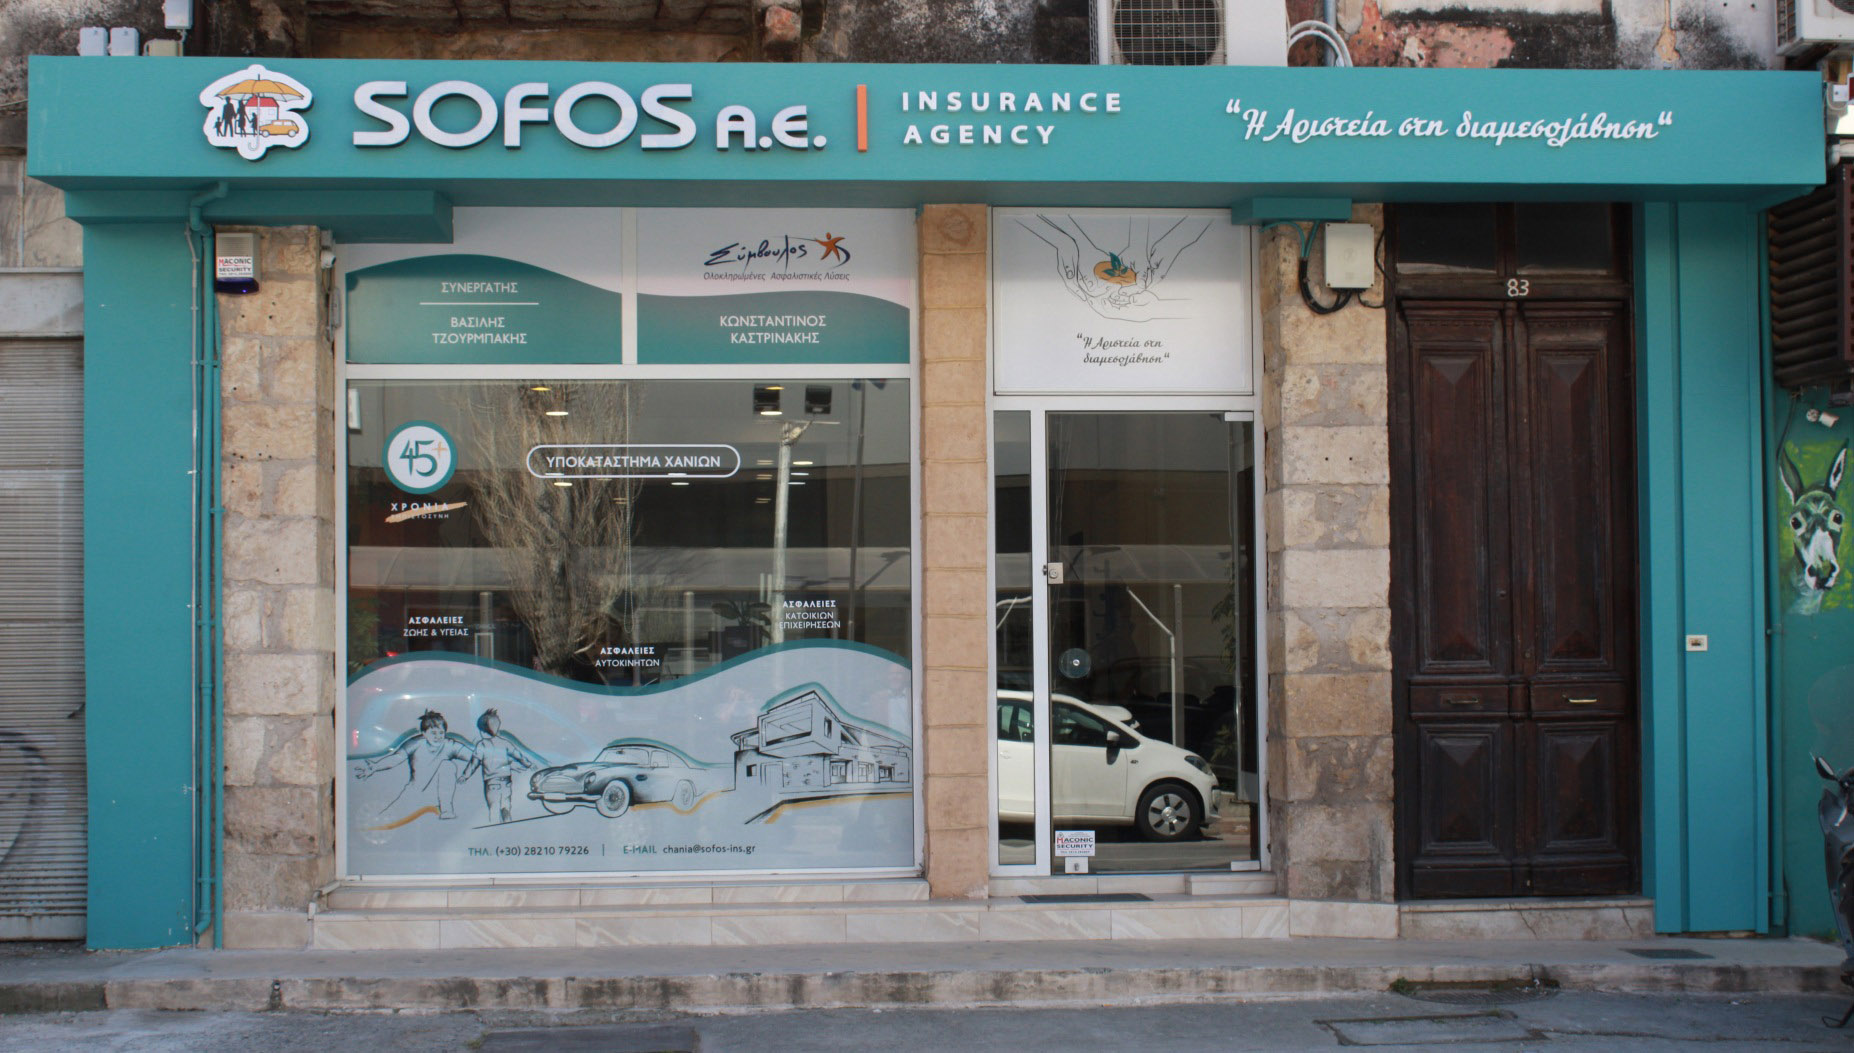 K. Kastrinakis: Sofos Insurance Agency has a vision and development plan